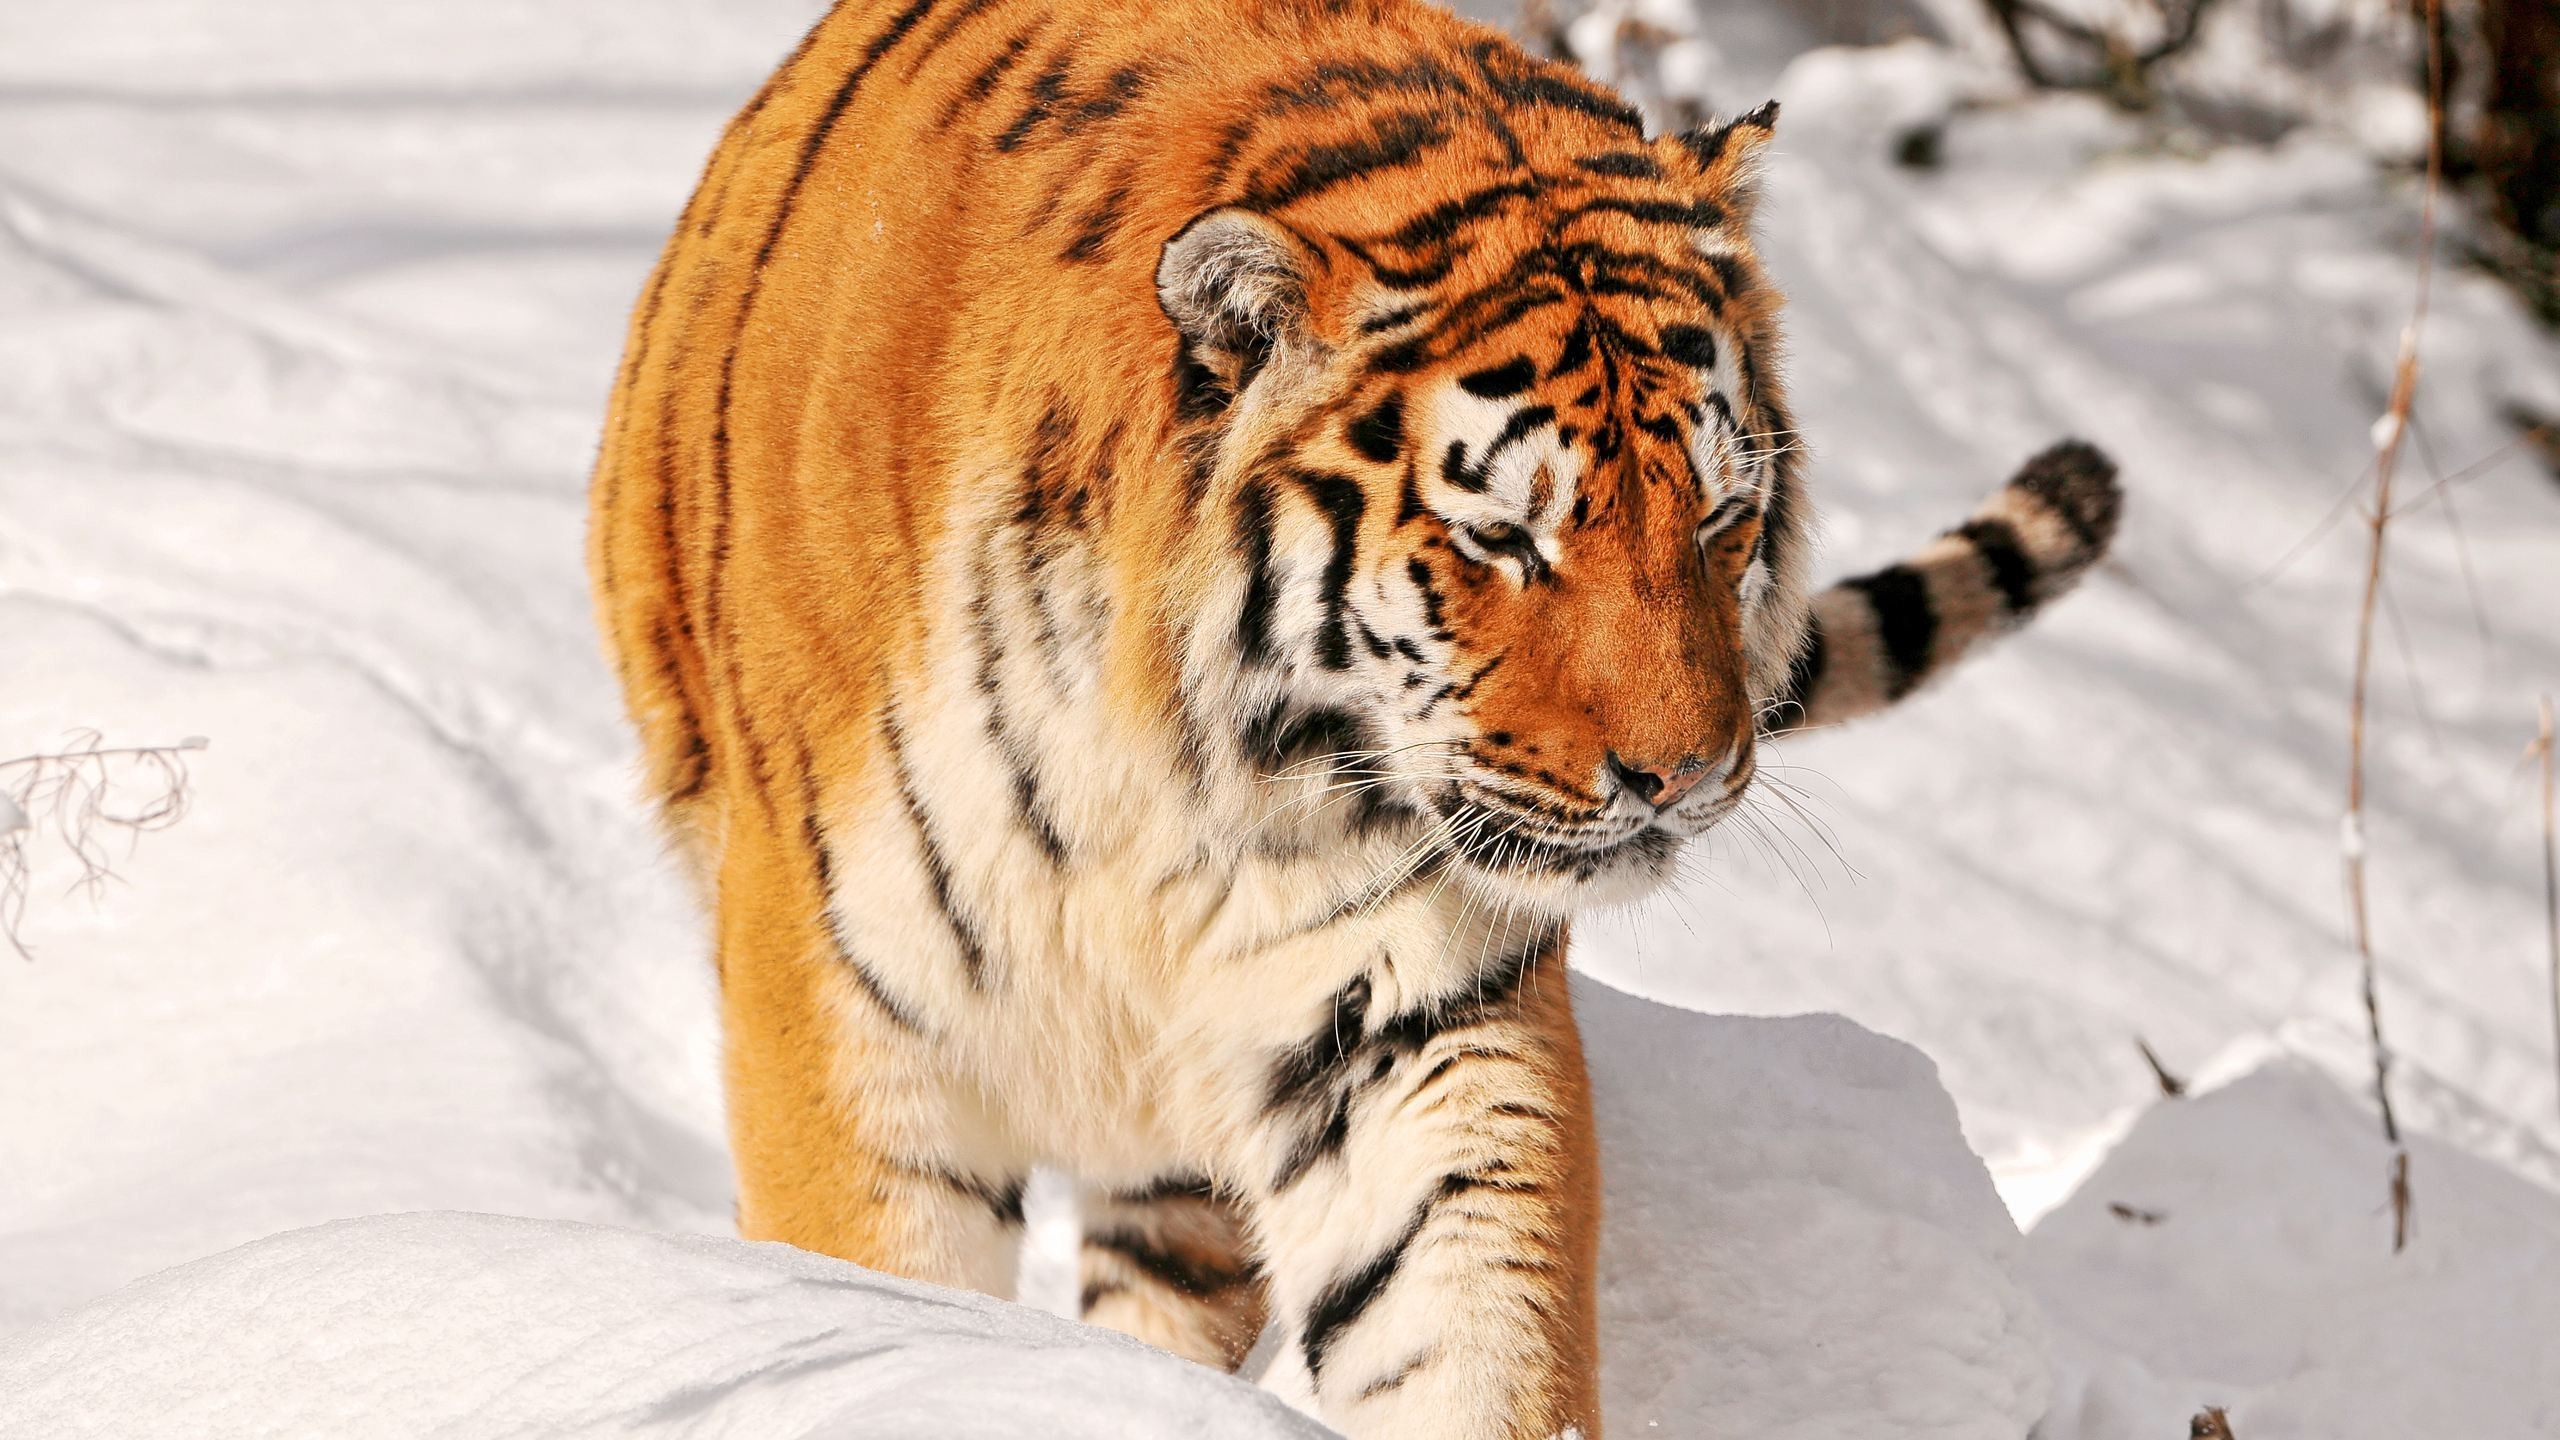 General 2560x1440 animals tiger snow big cats mammals closeup fur sunlight whiskers depth of field nature